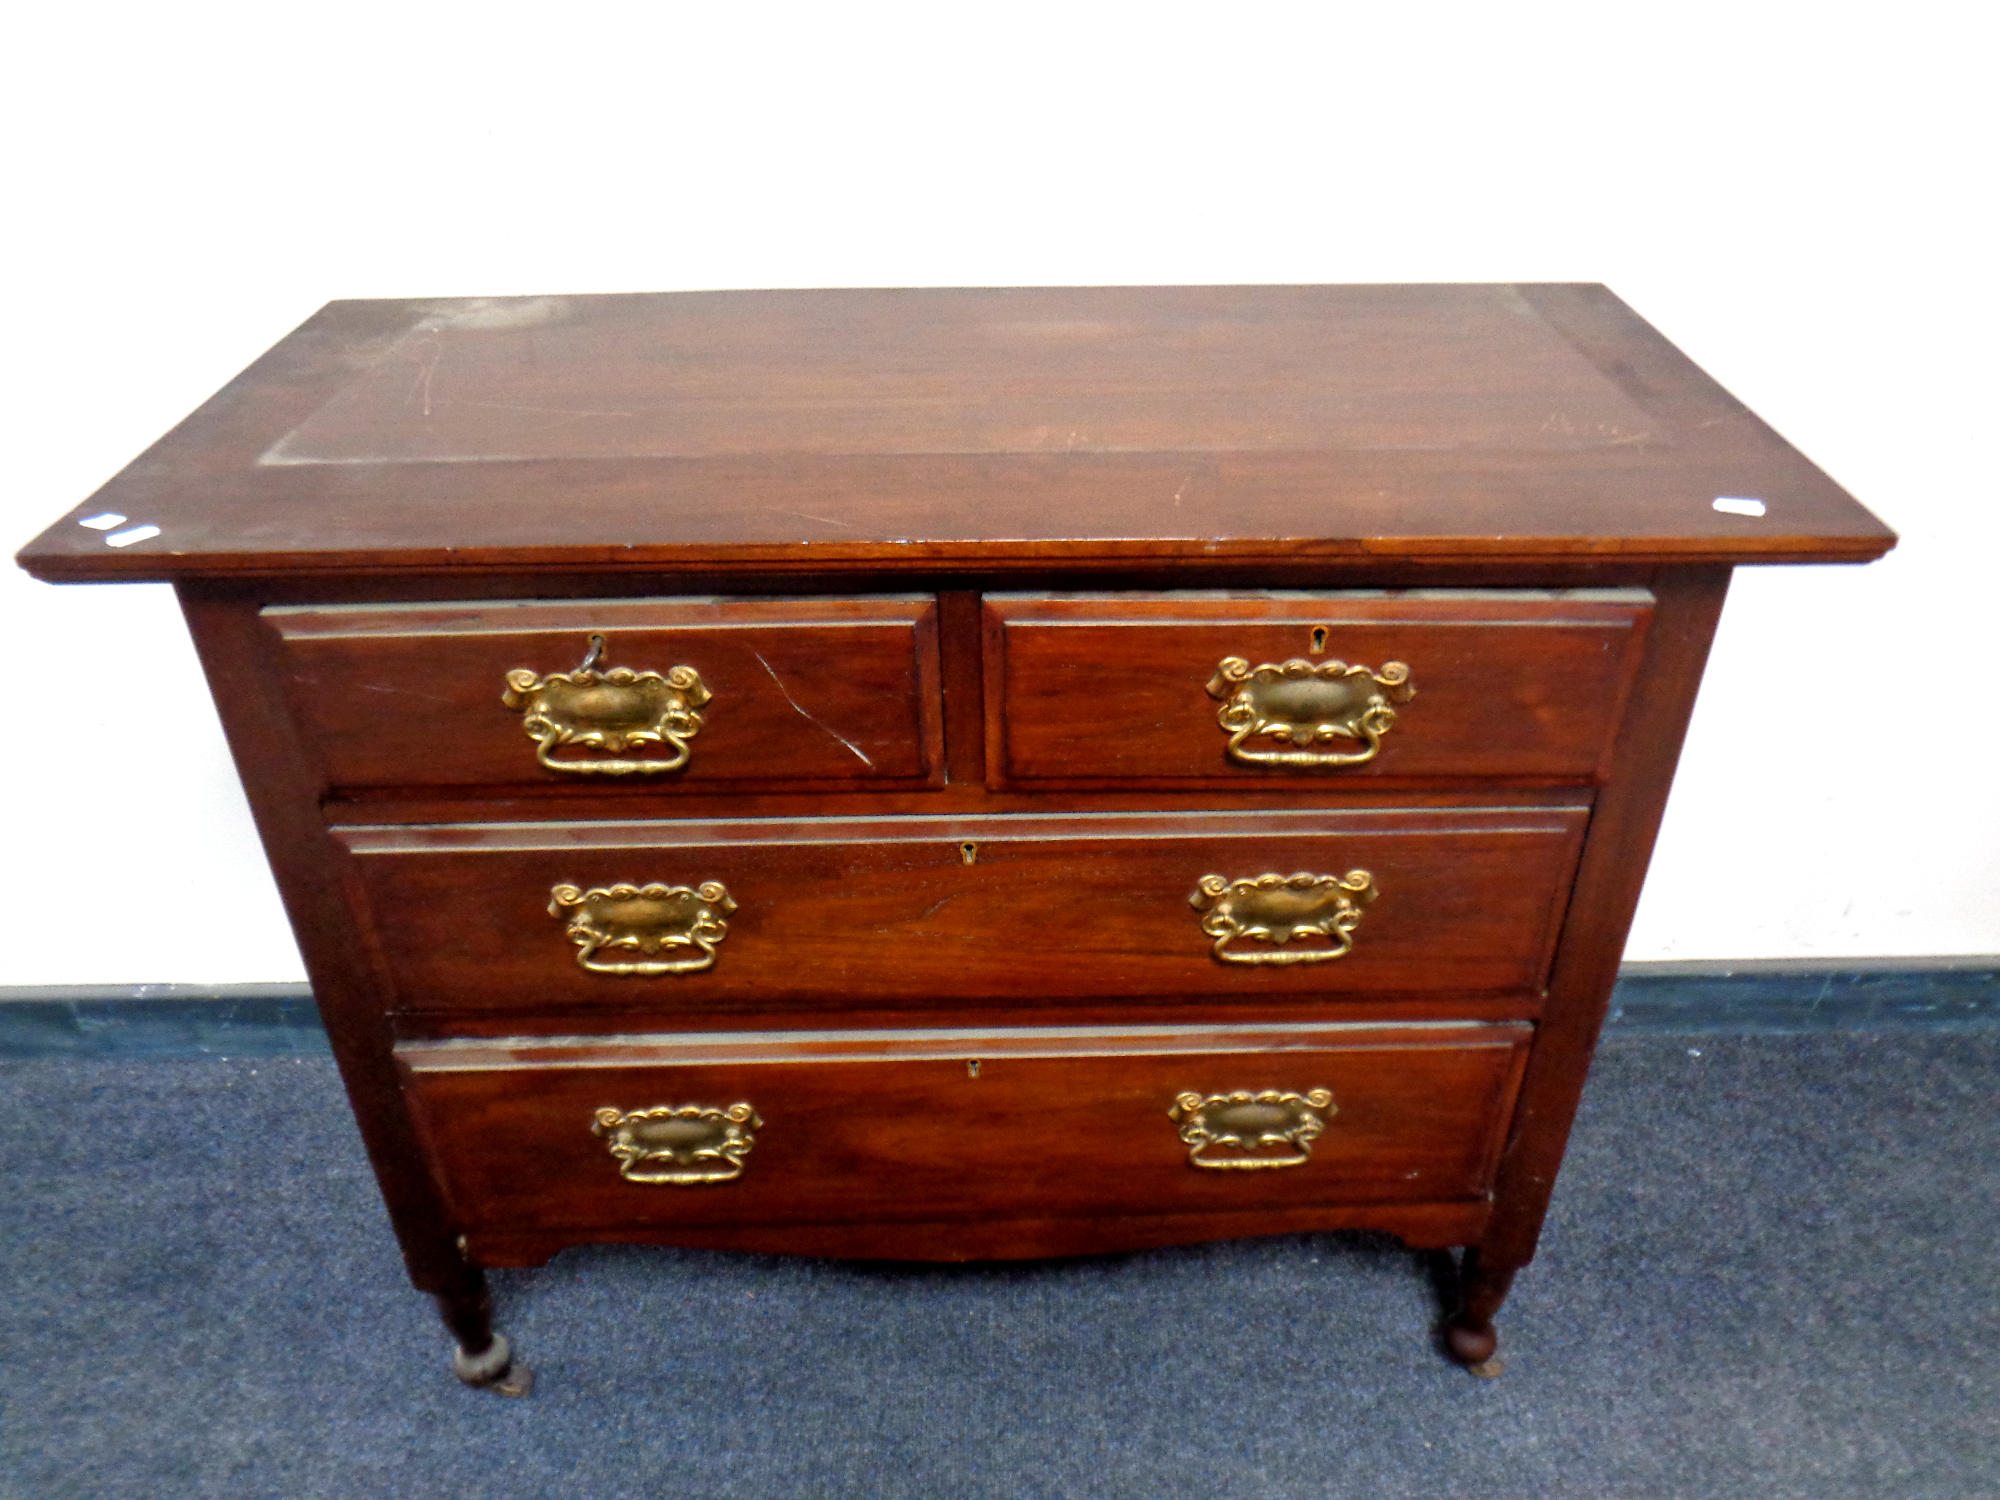 An Edwardian four drawer chest